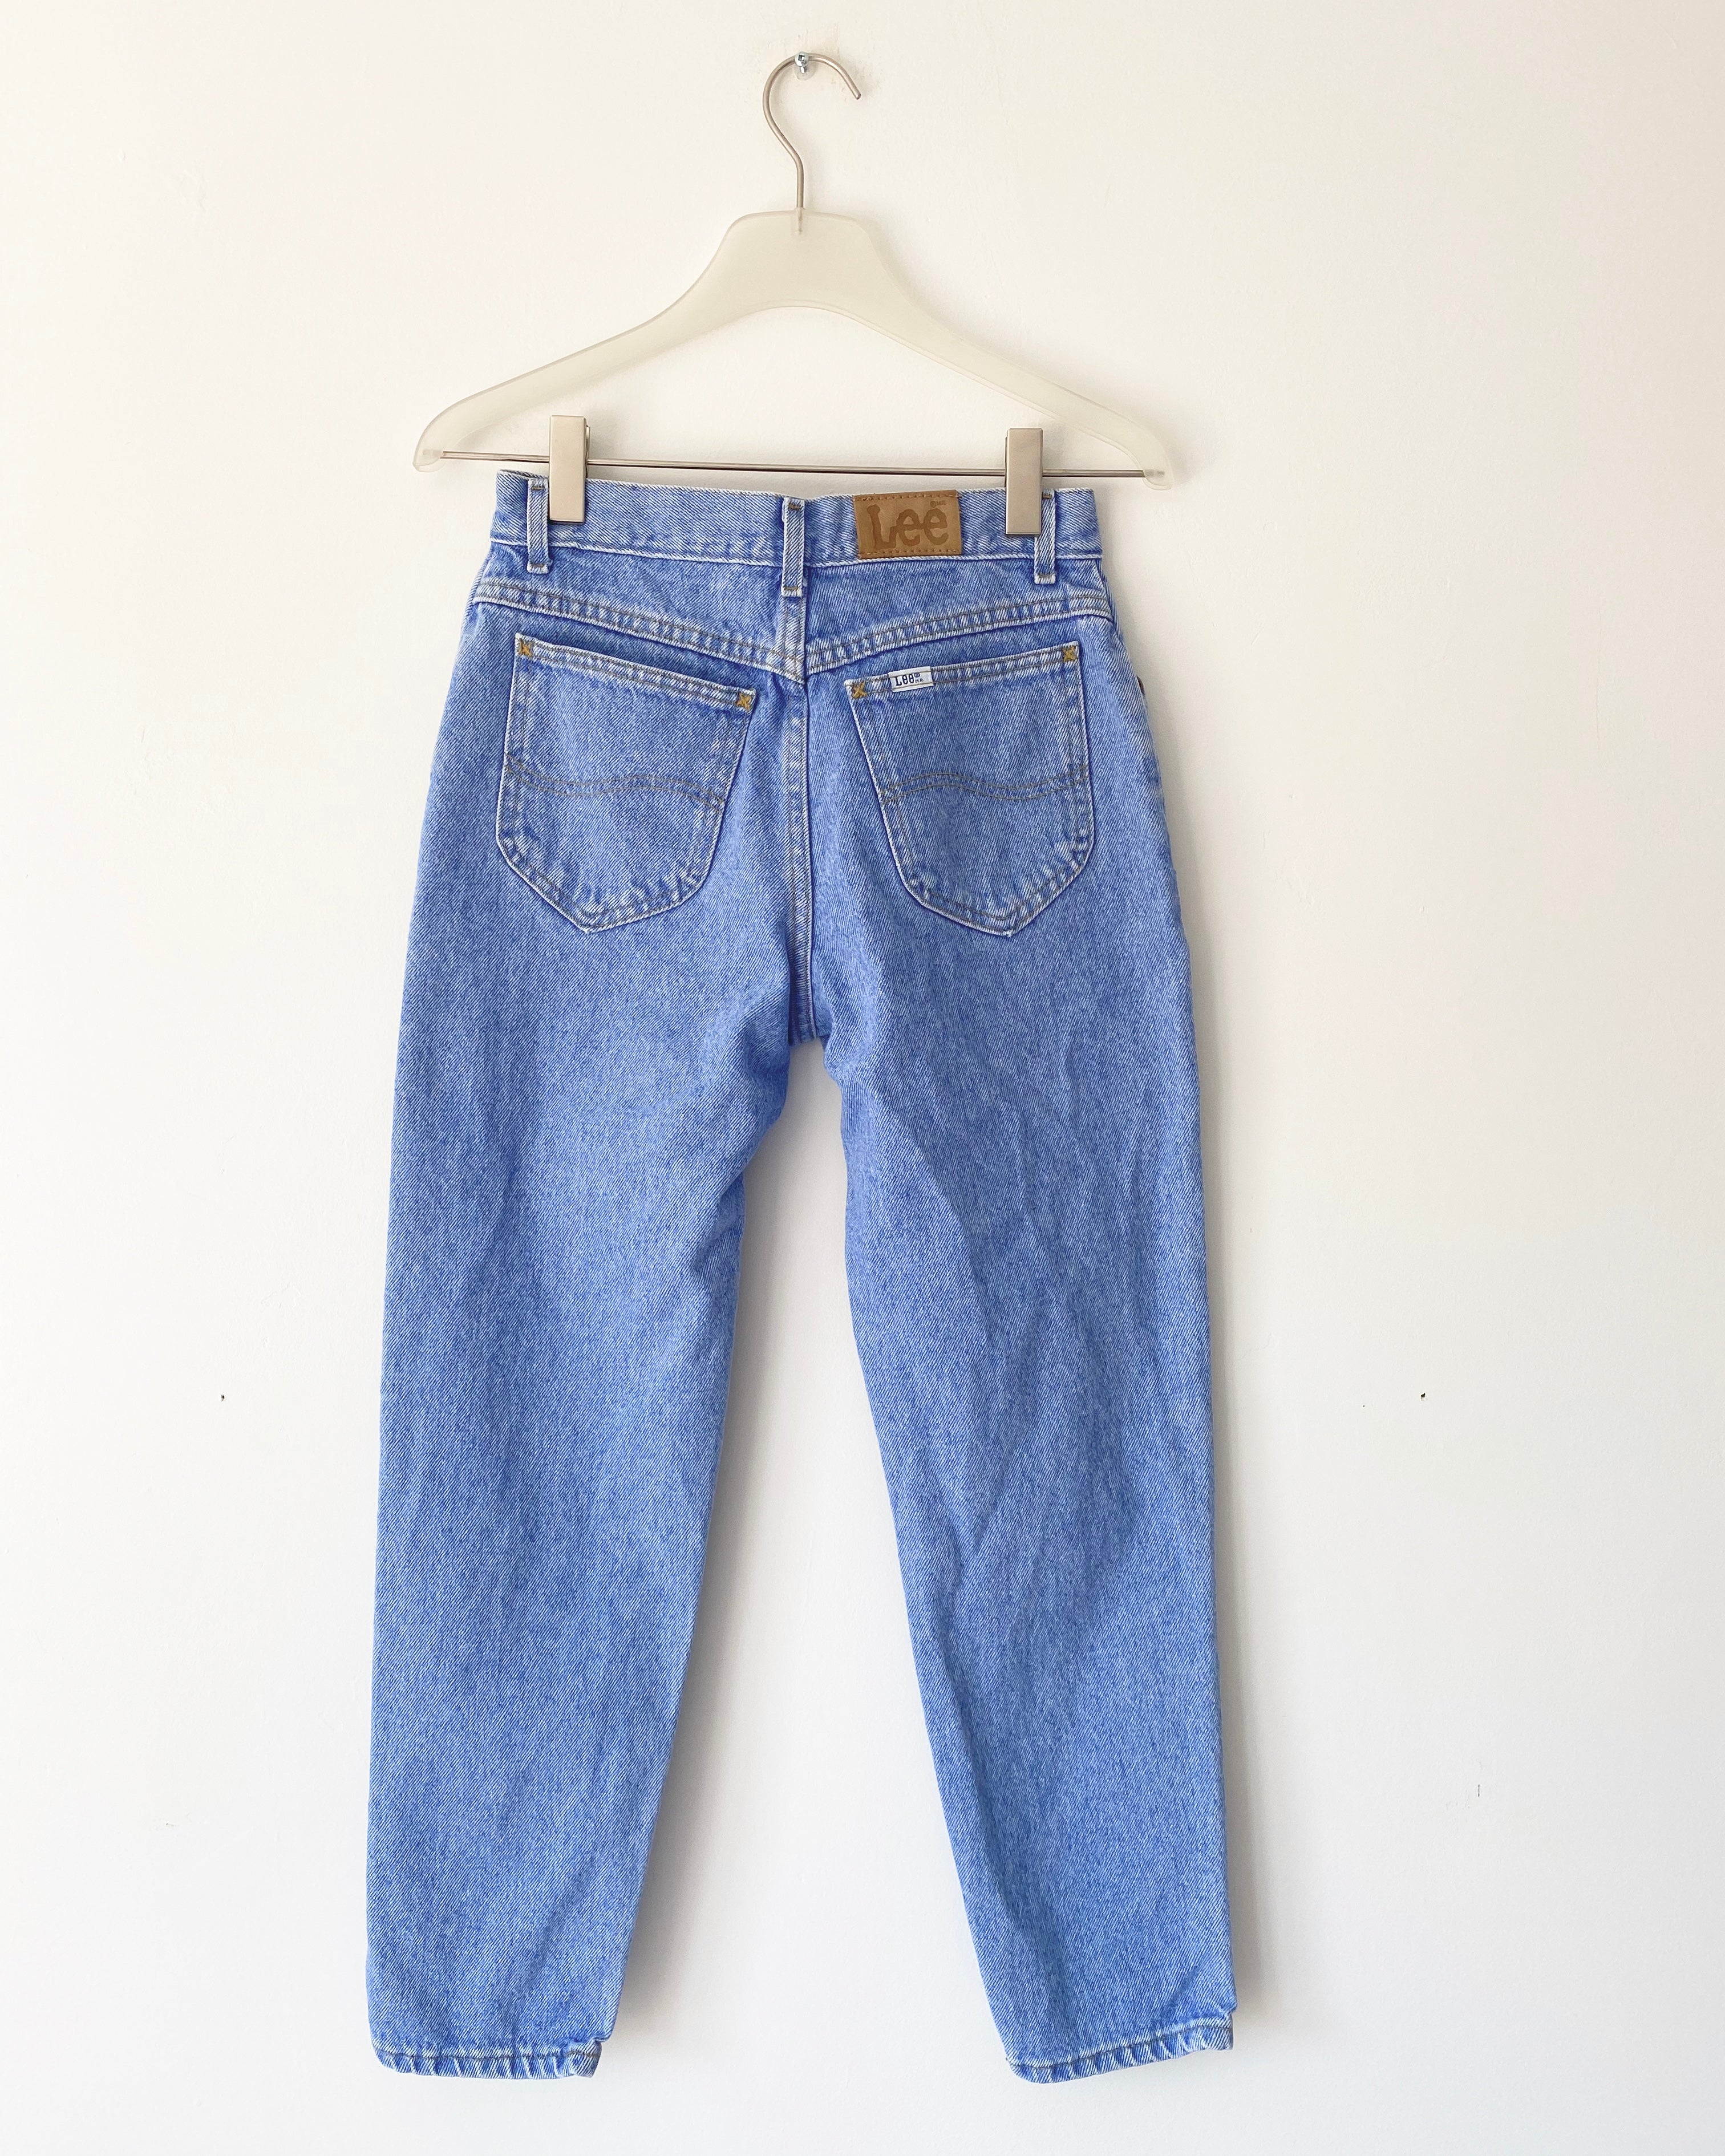 Vintage LEEs Made in USA Light Wash Jeans size 26